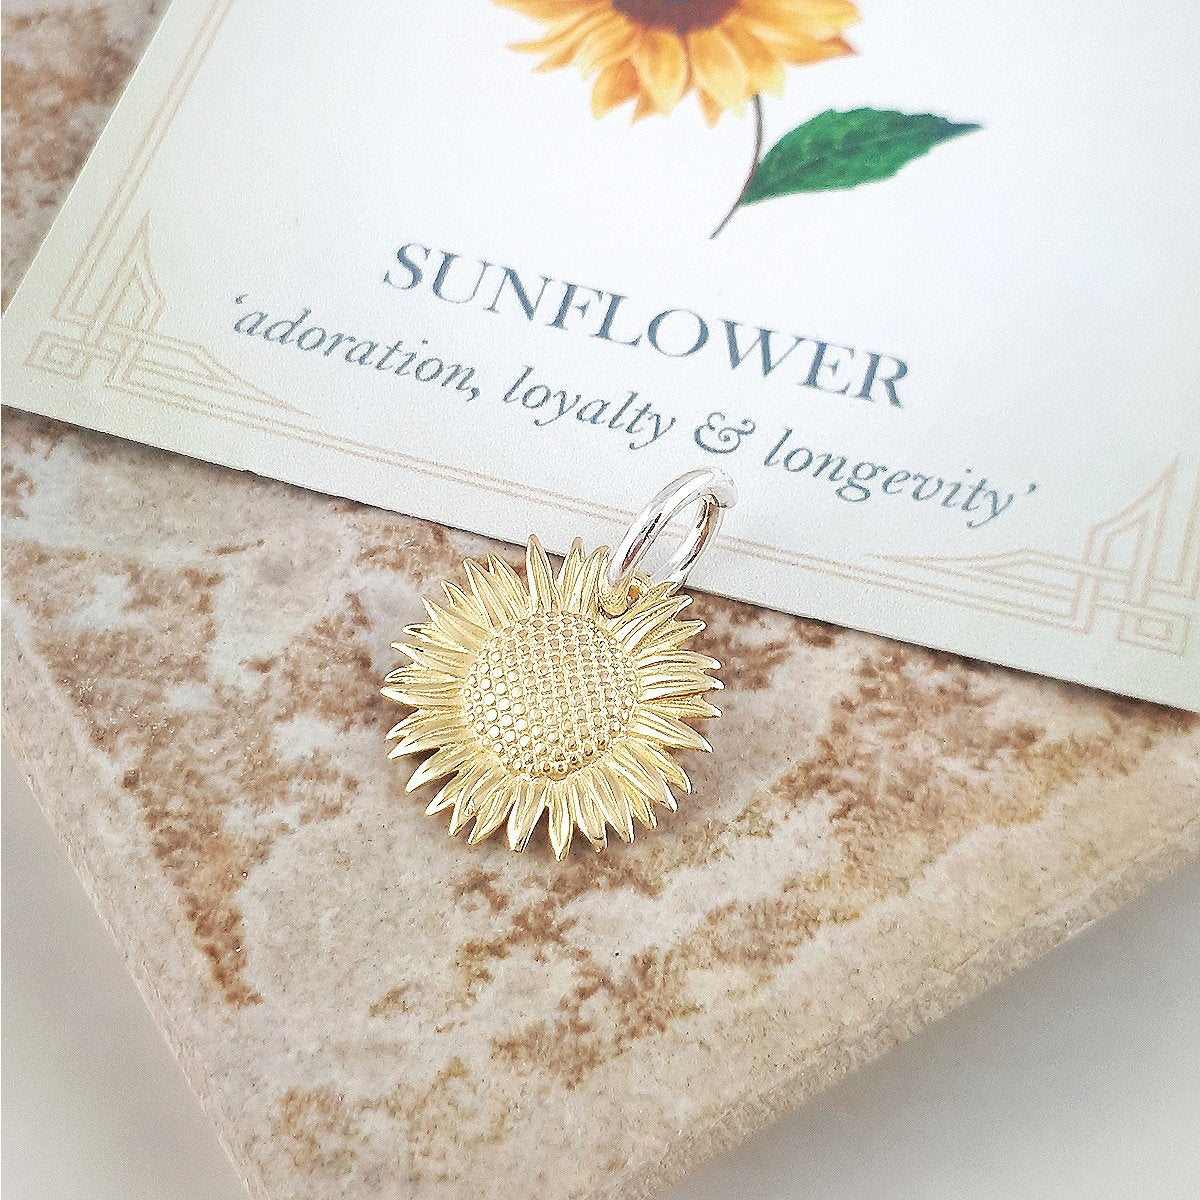 solid gold sunflower bracelet necklace charm 9 carat made in UK